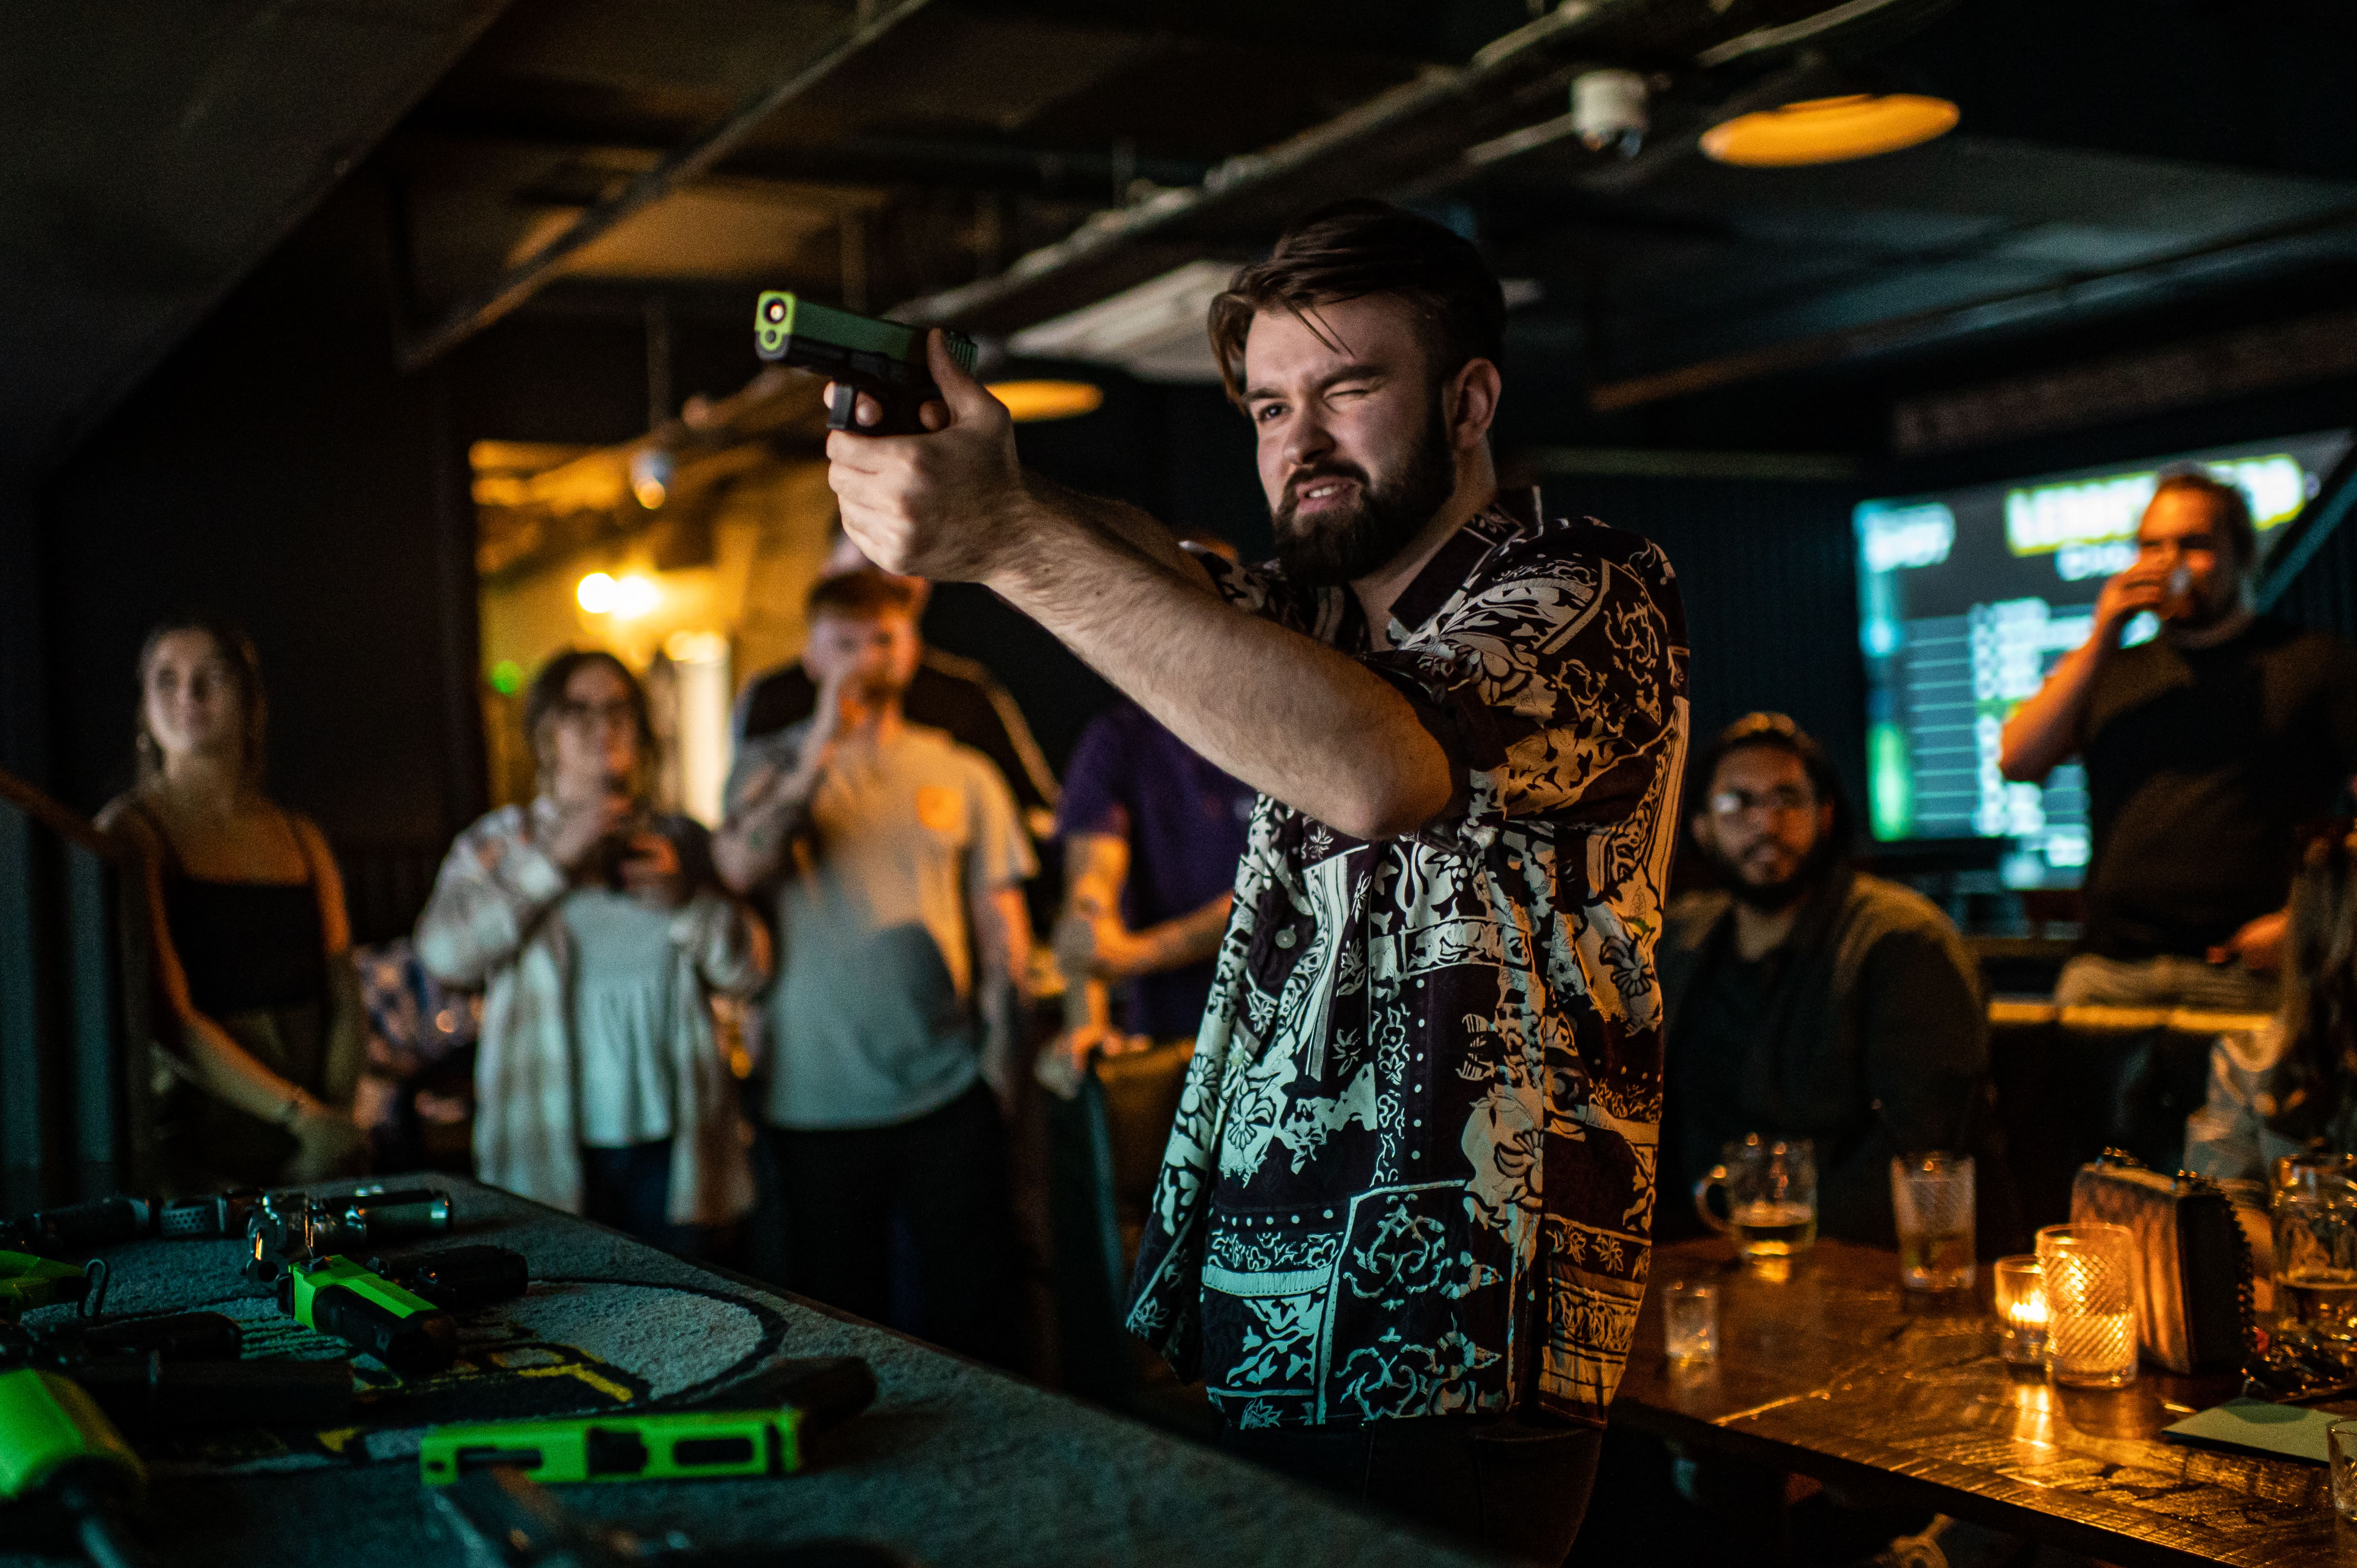 Man aiming replica gun while people drink around him